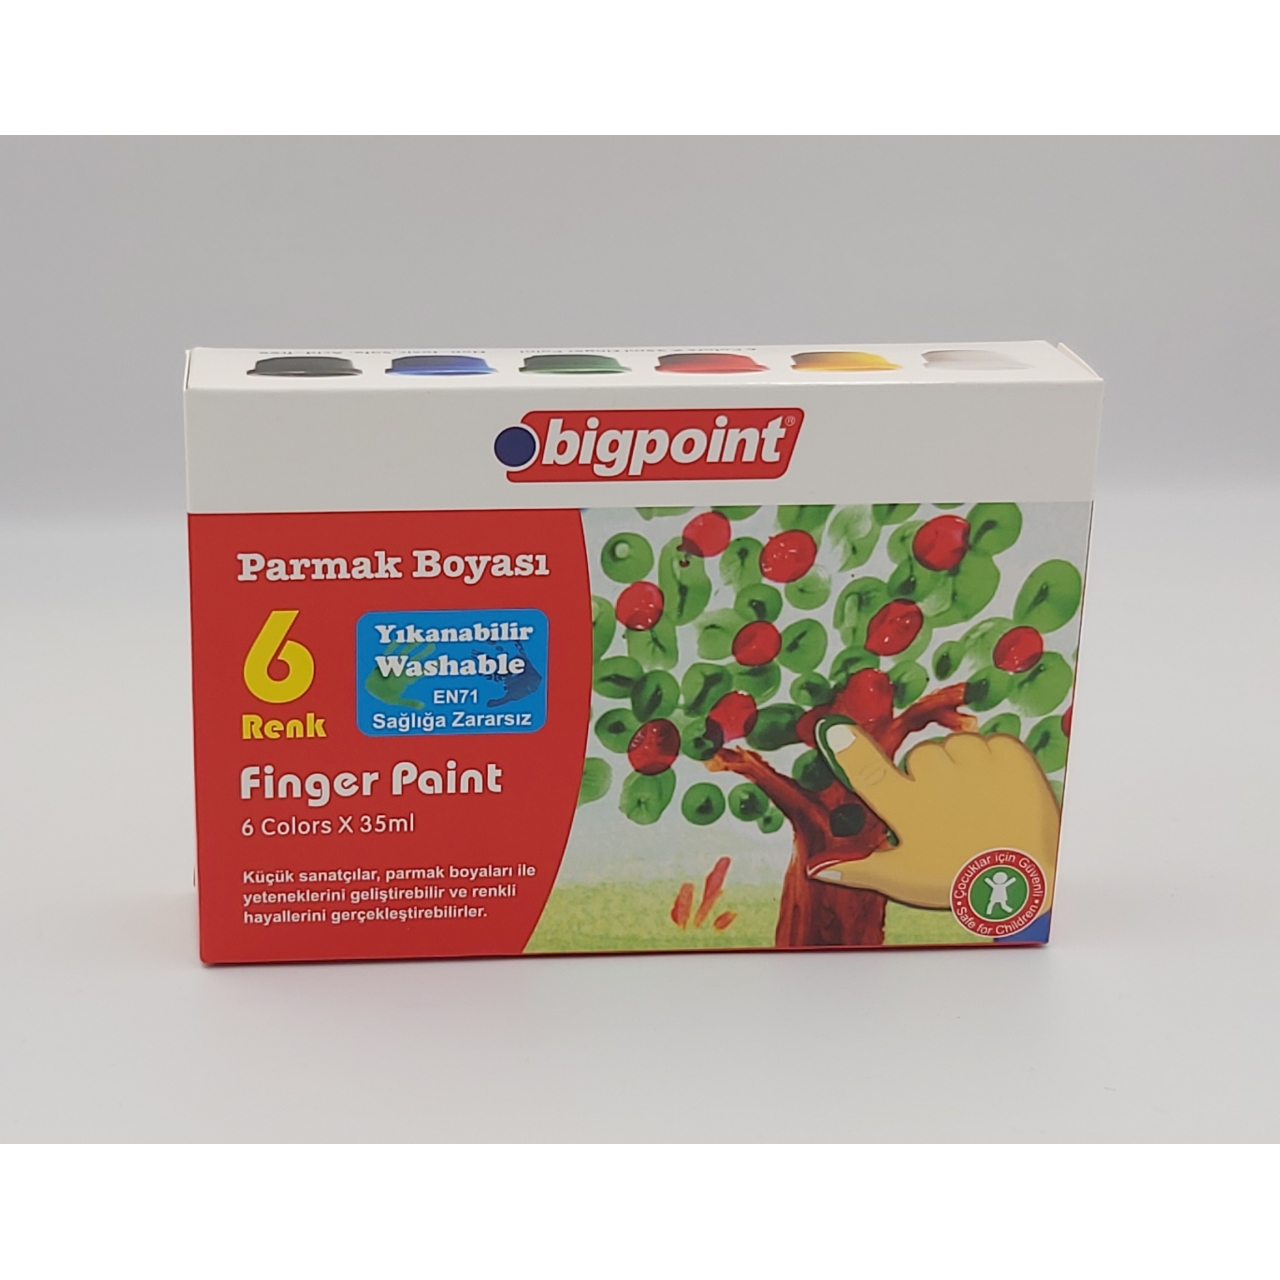 Bigpoint Parmak Boyası 6 Renk